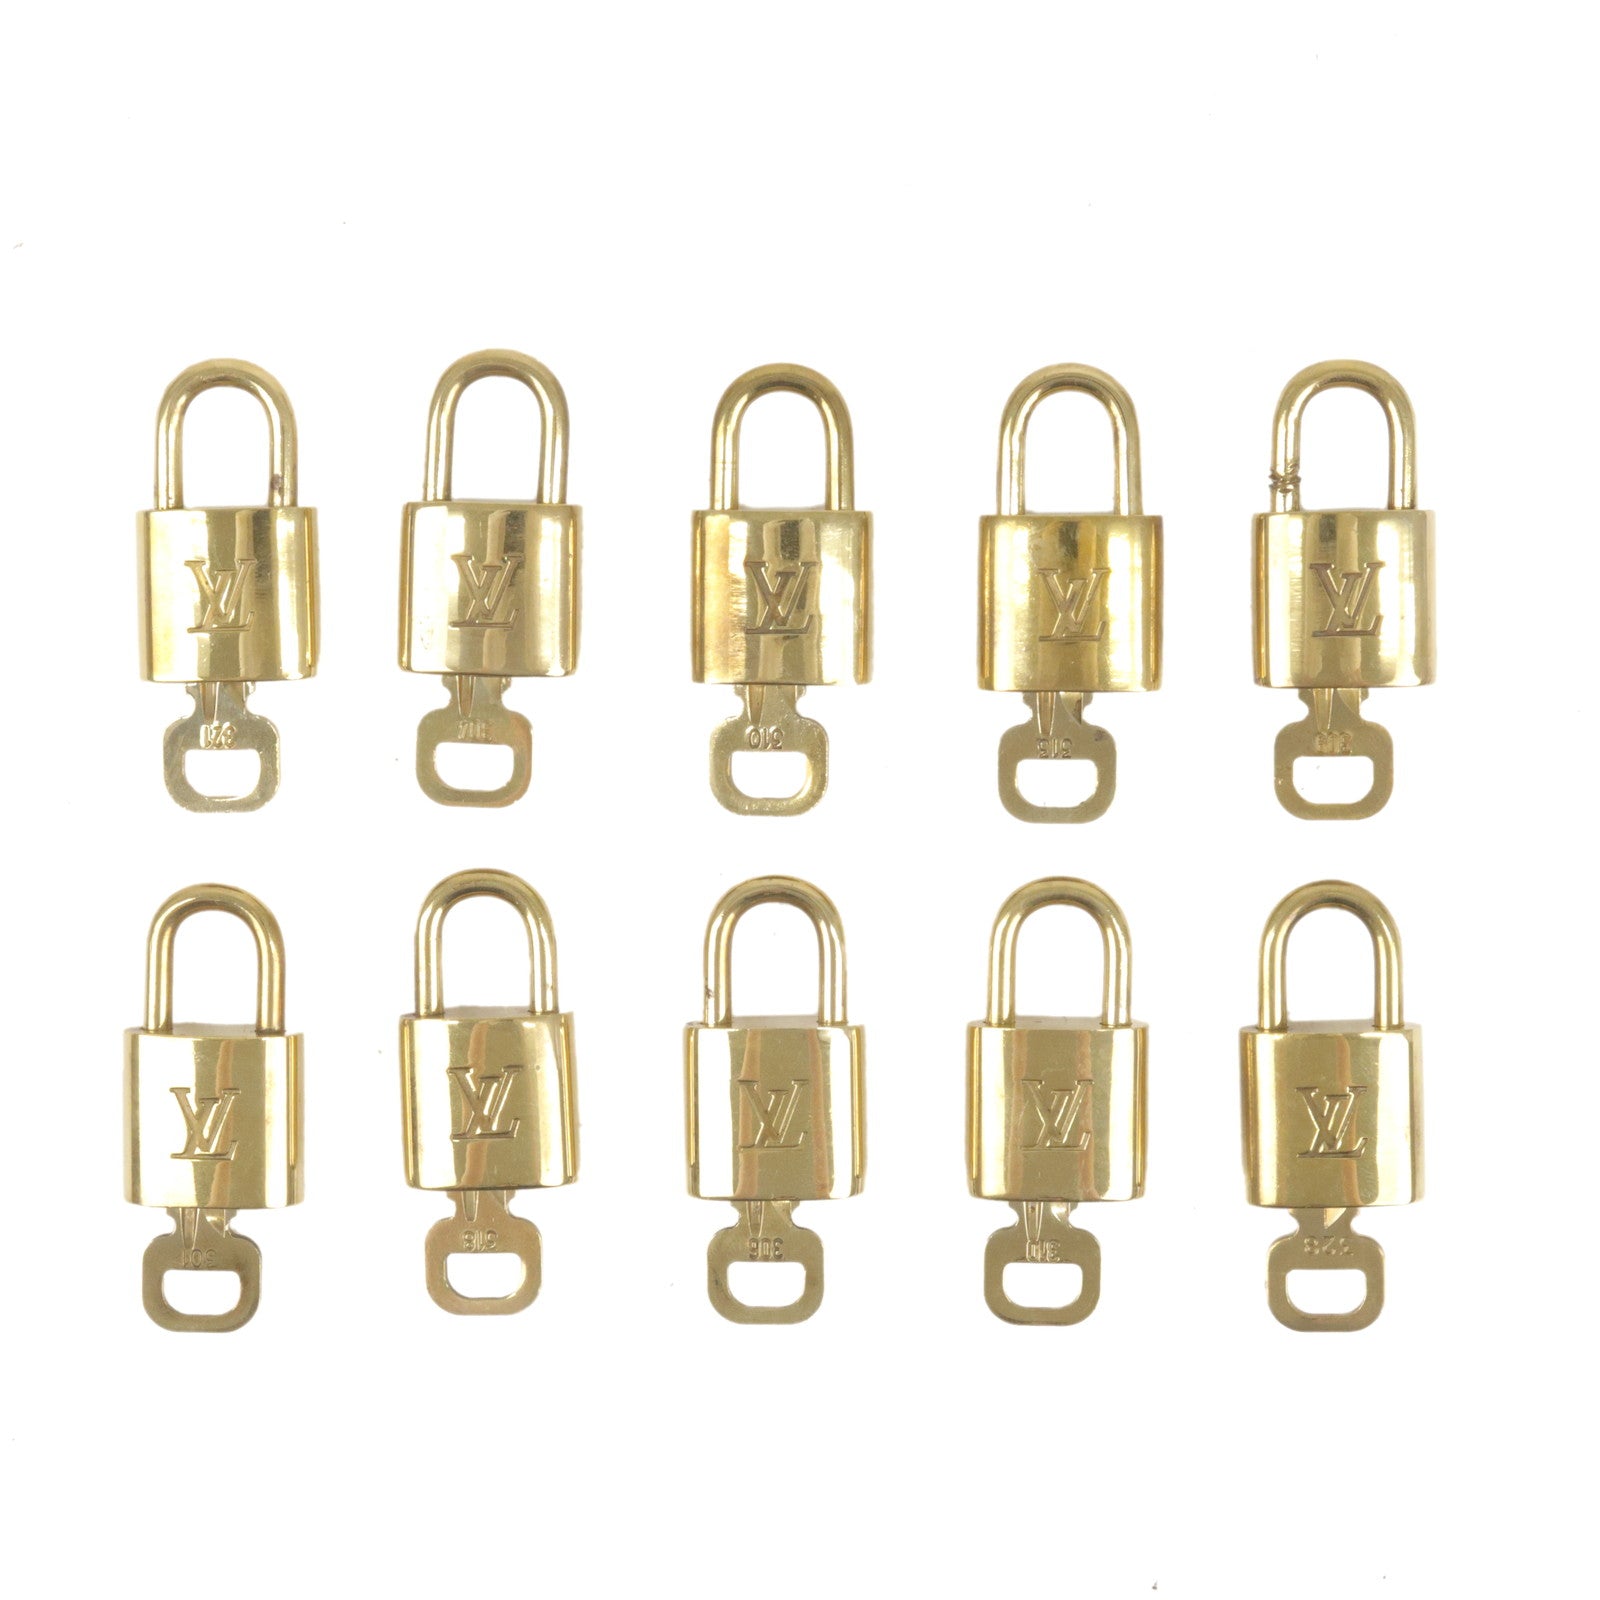 Authentic pre-owned Louis Vuitton lock & key set